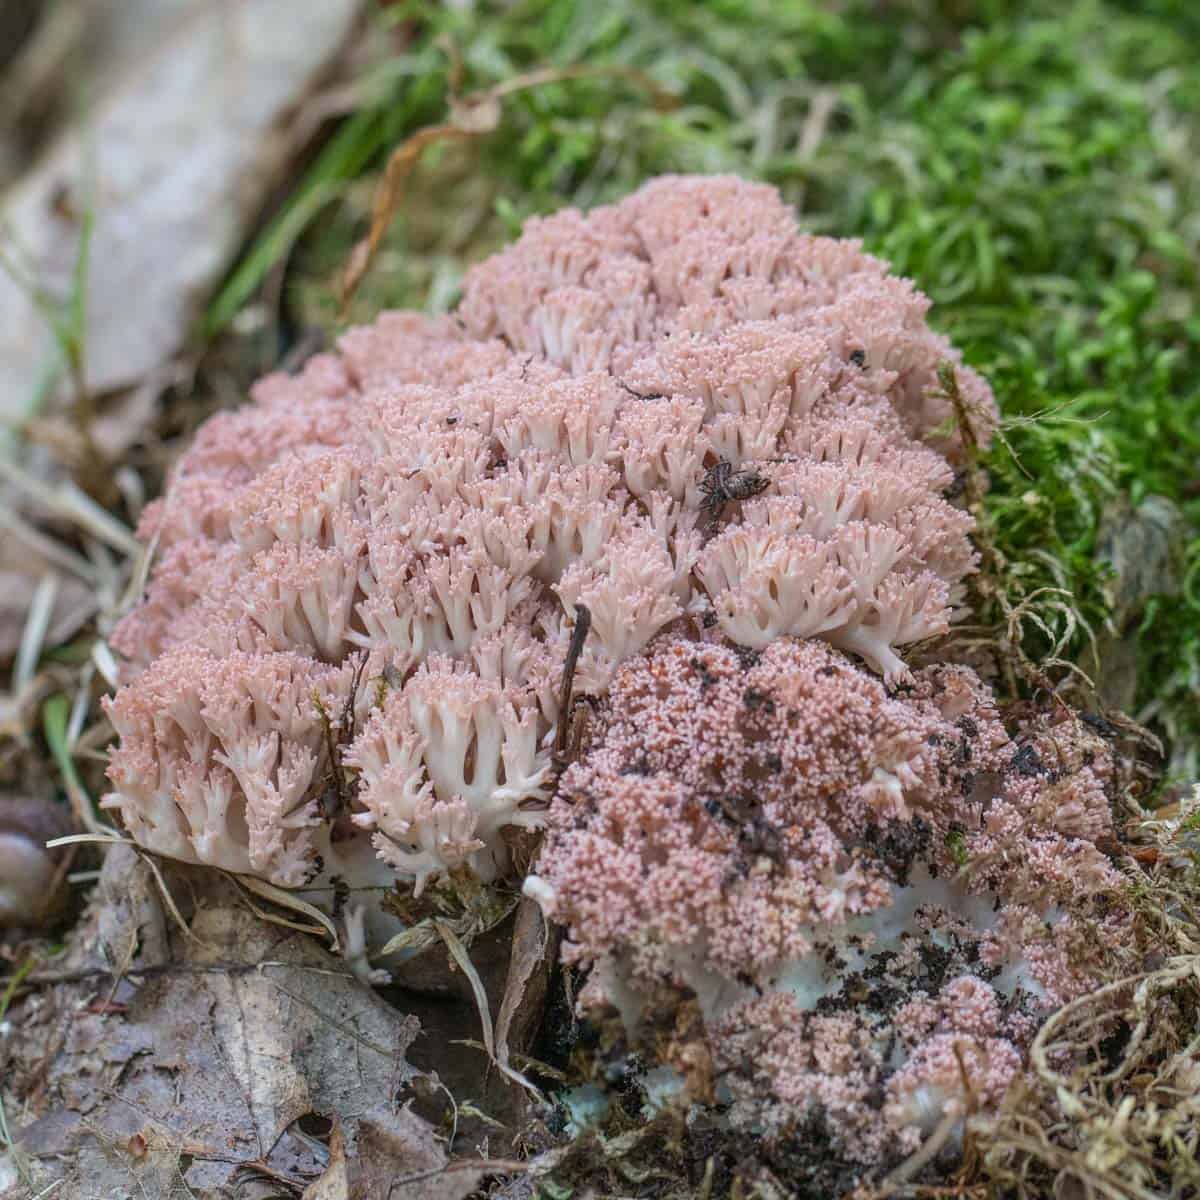 ramaria botrytis or pink tipped coral mushrooms